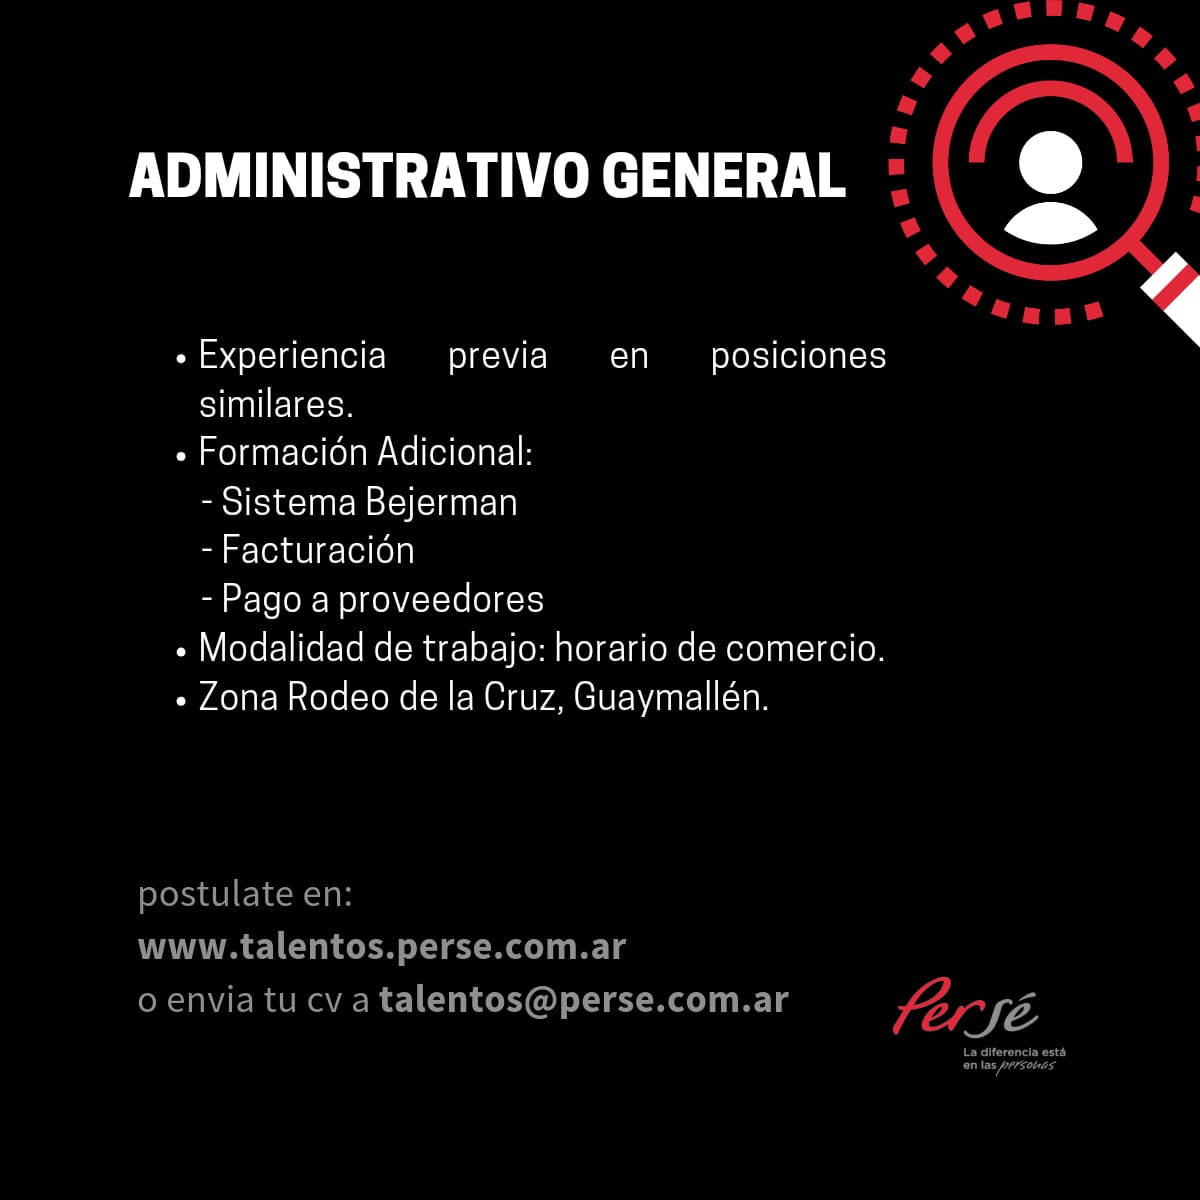 Administrativo general